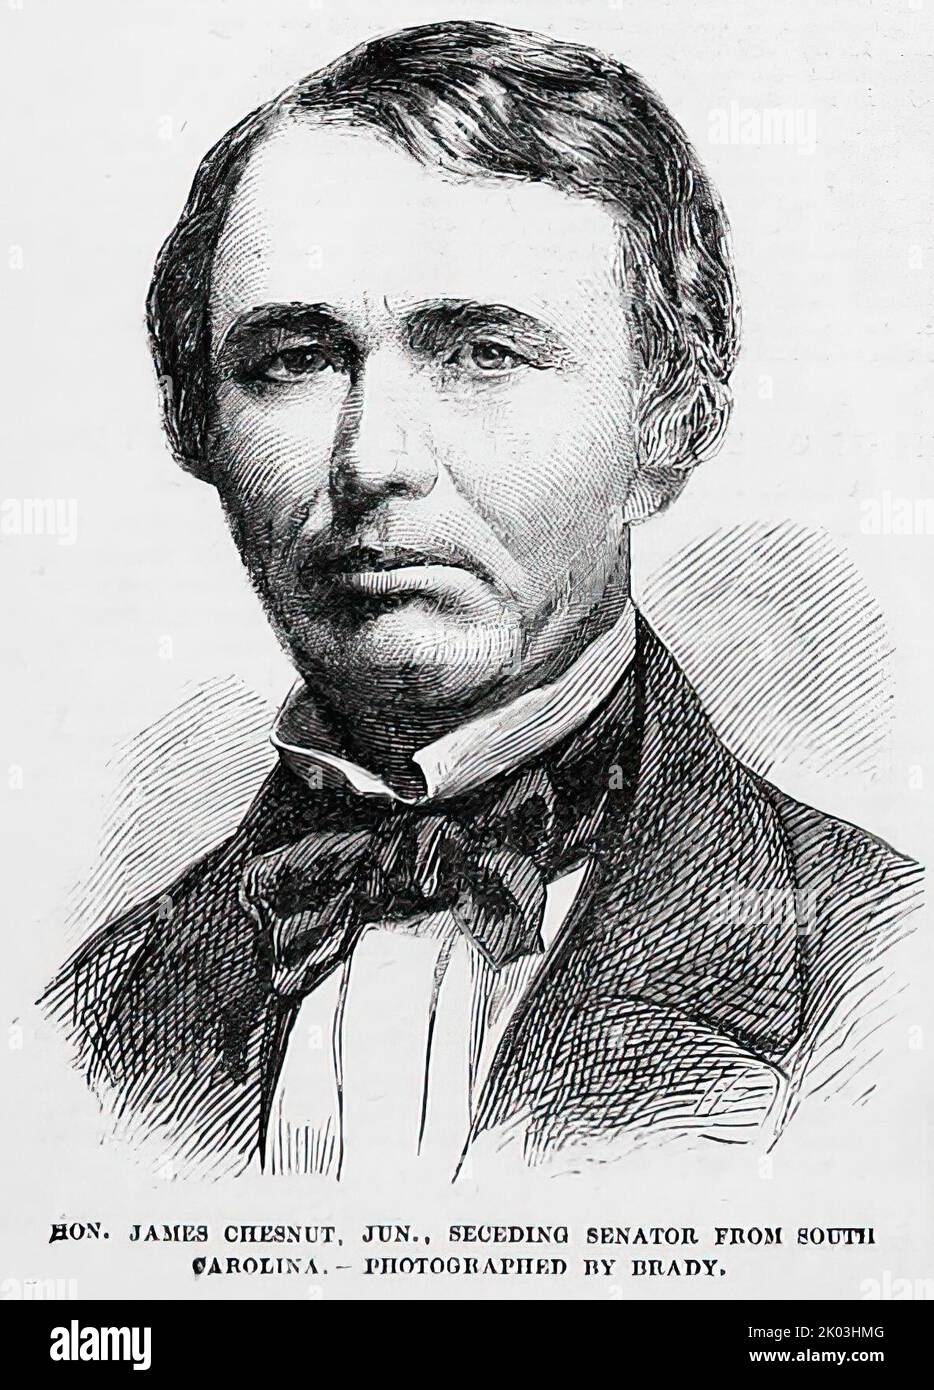 Porträt von James Caresnut Jr., Senator aus South Carolina (1860). 19.. Jahrhundert Illustration aus Frank Leslie's Illustrated Newspaper Stockfoto